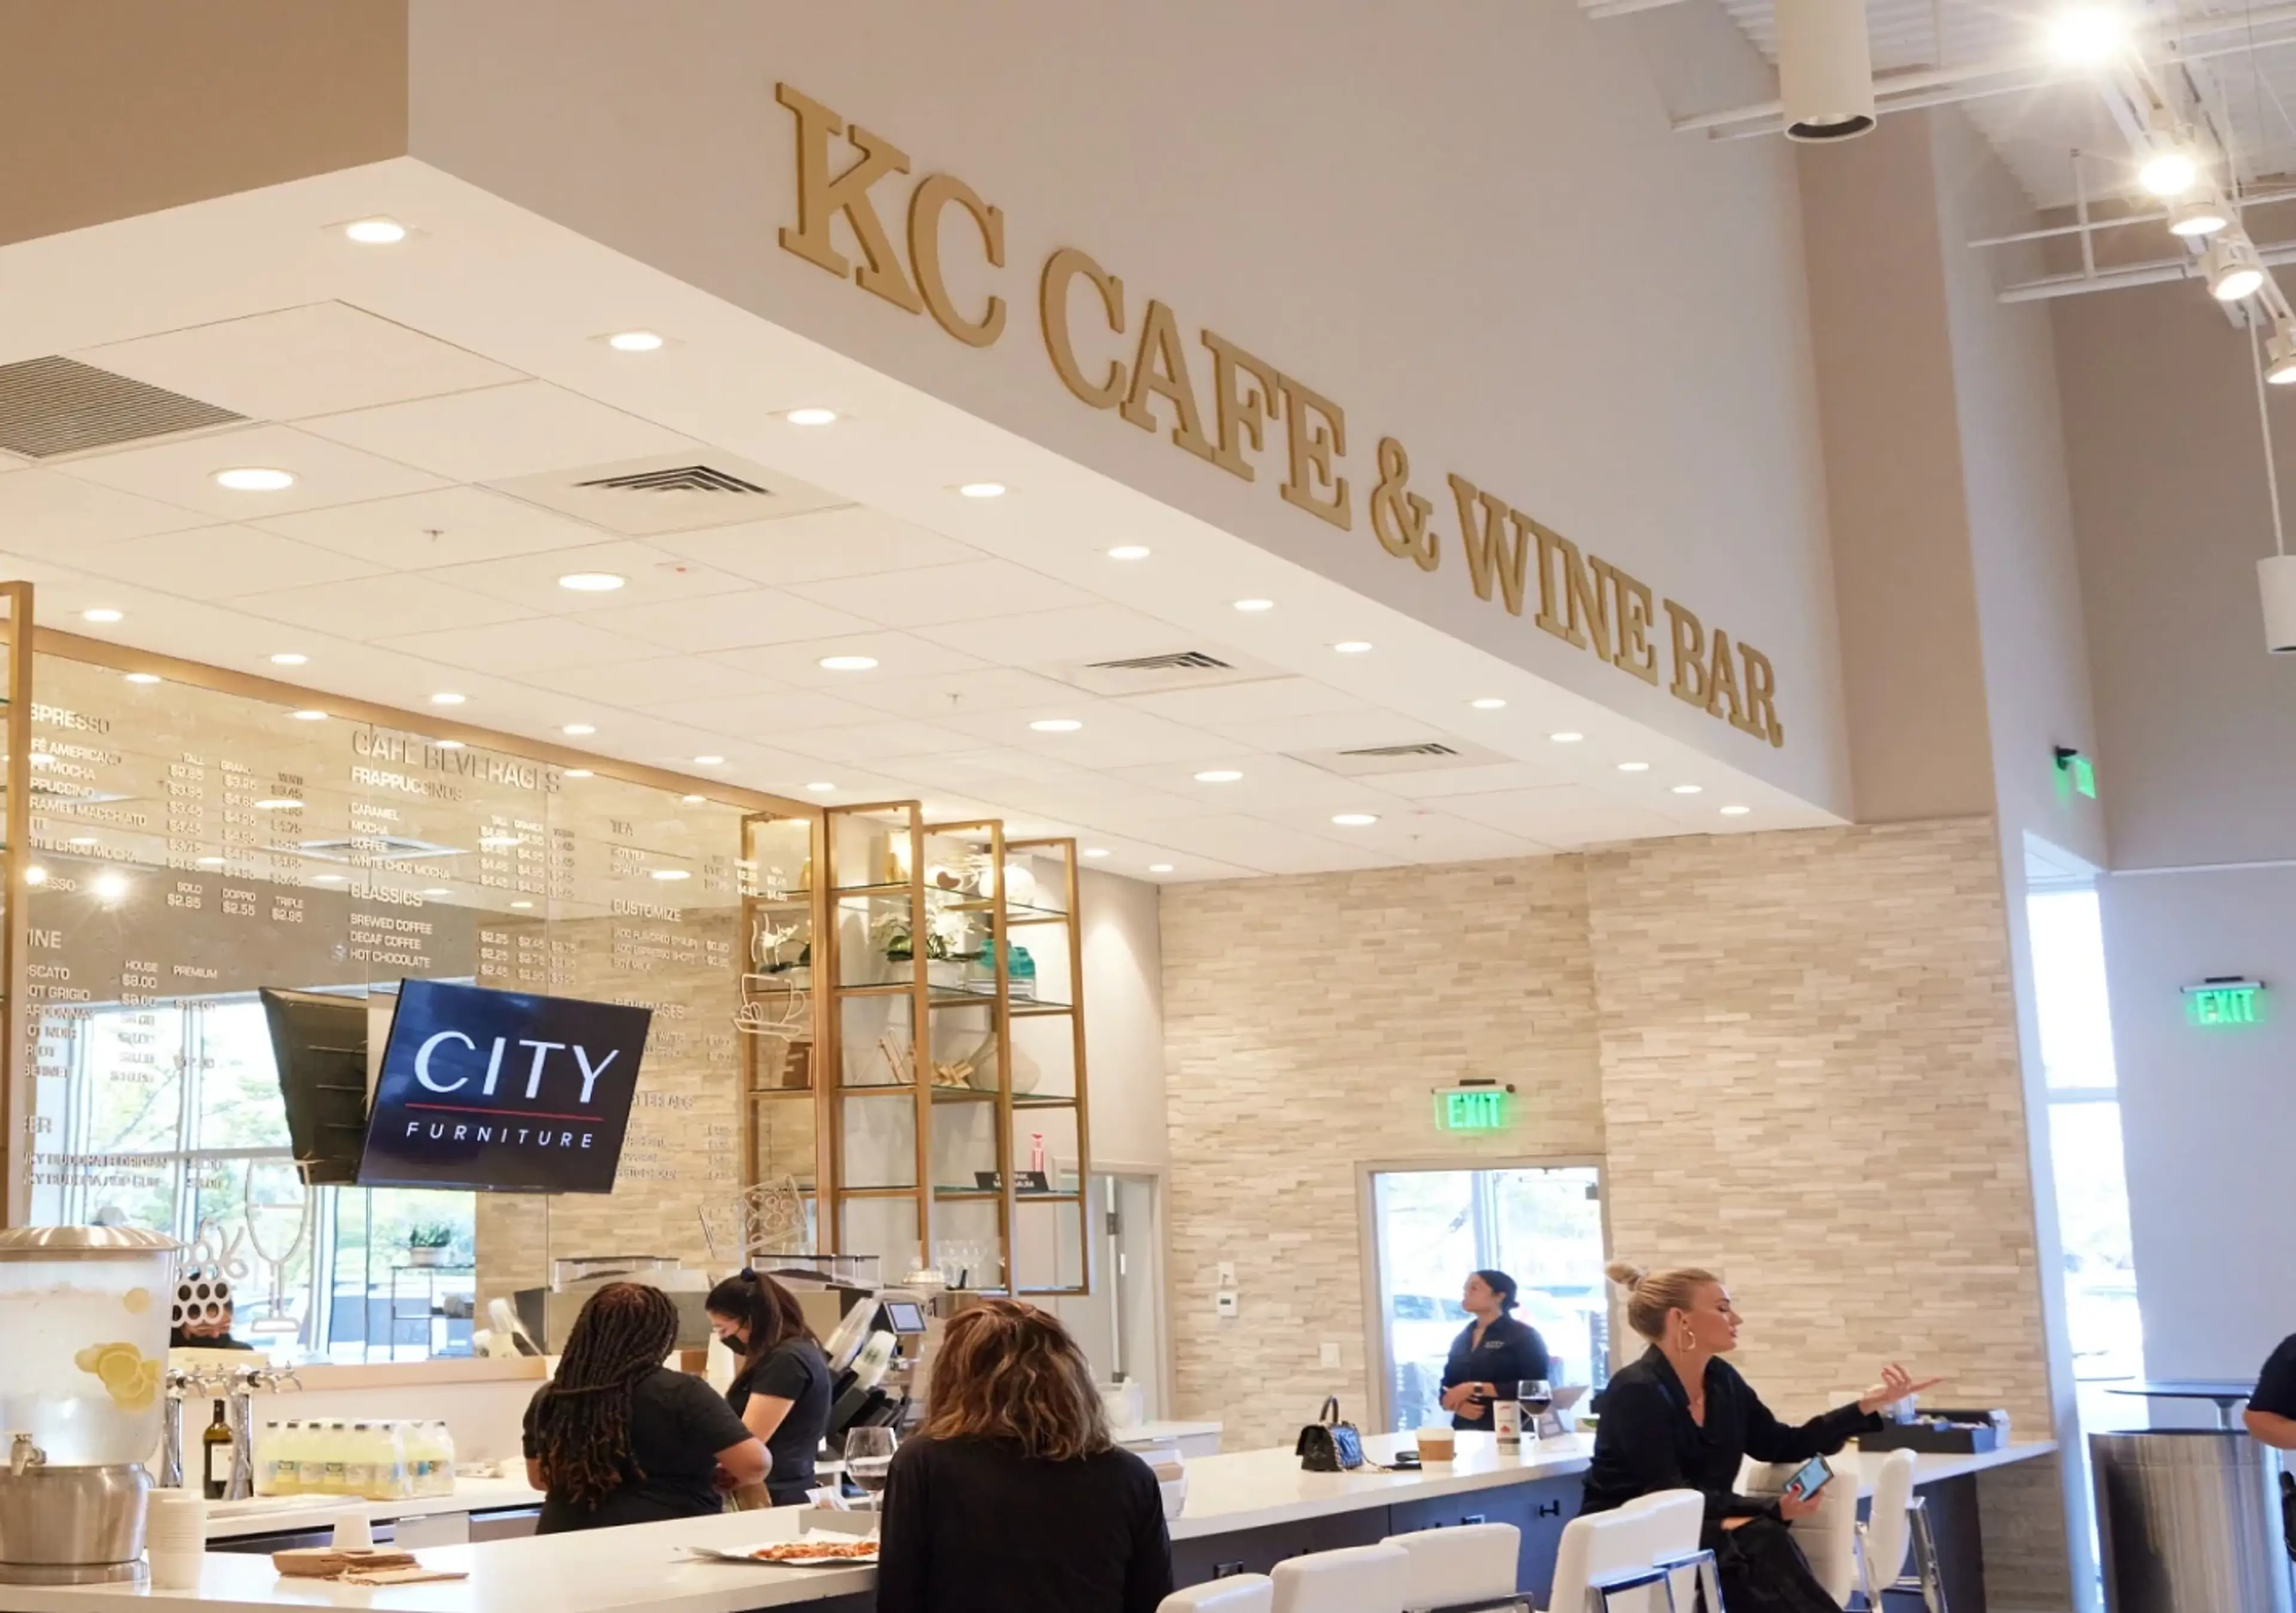 KC Café & Wine Bar